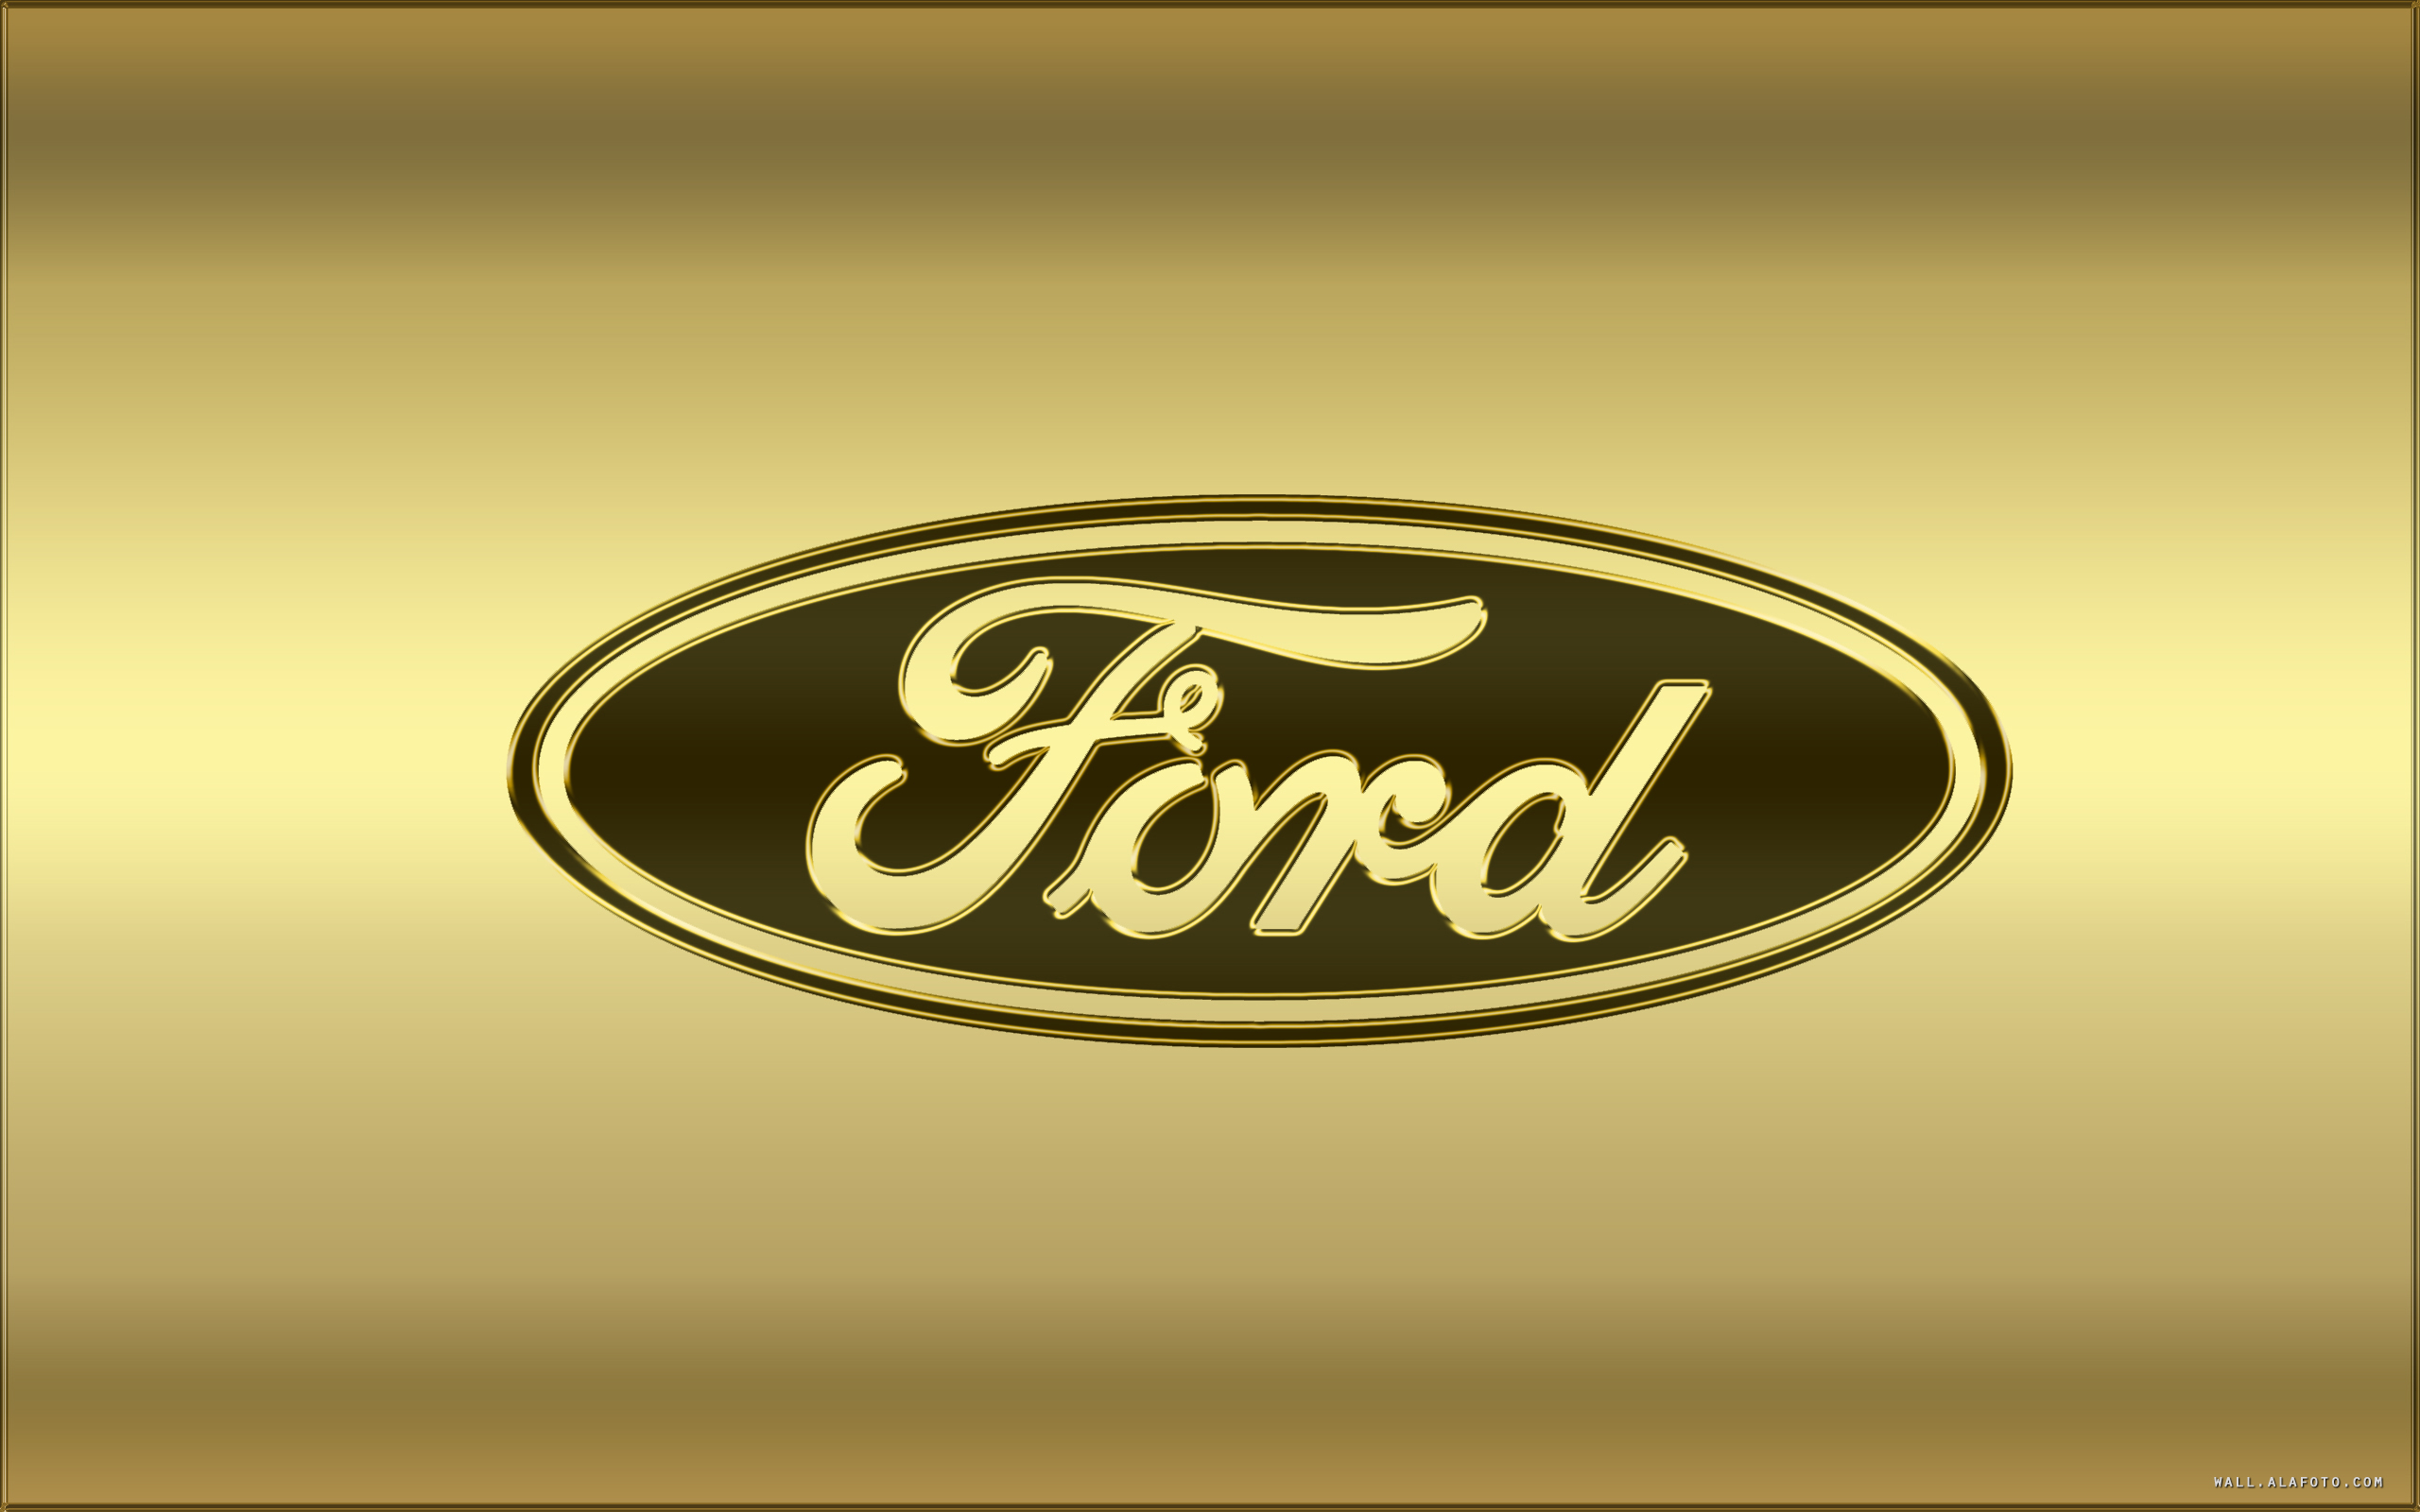 Ford Cars Logos   Ford logo 101   Alafoto Wallpapers 2560x1600